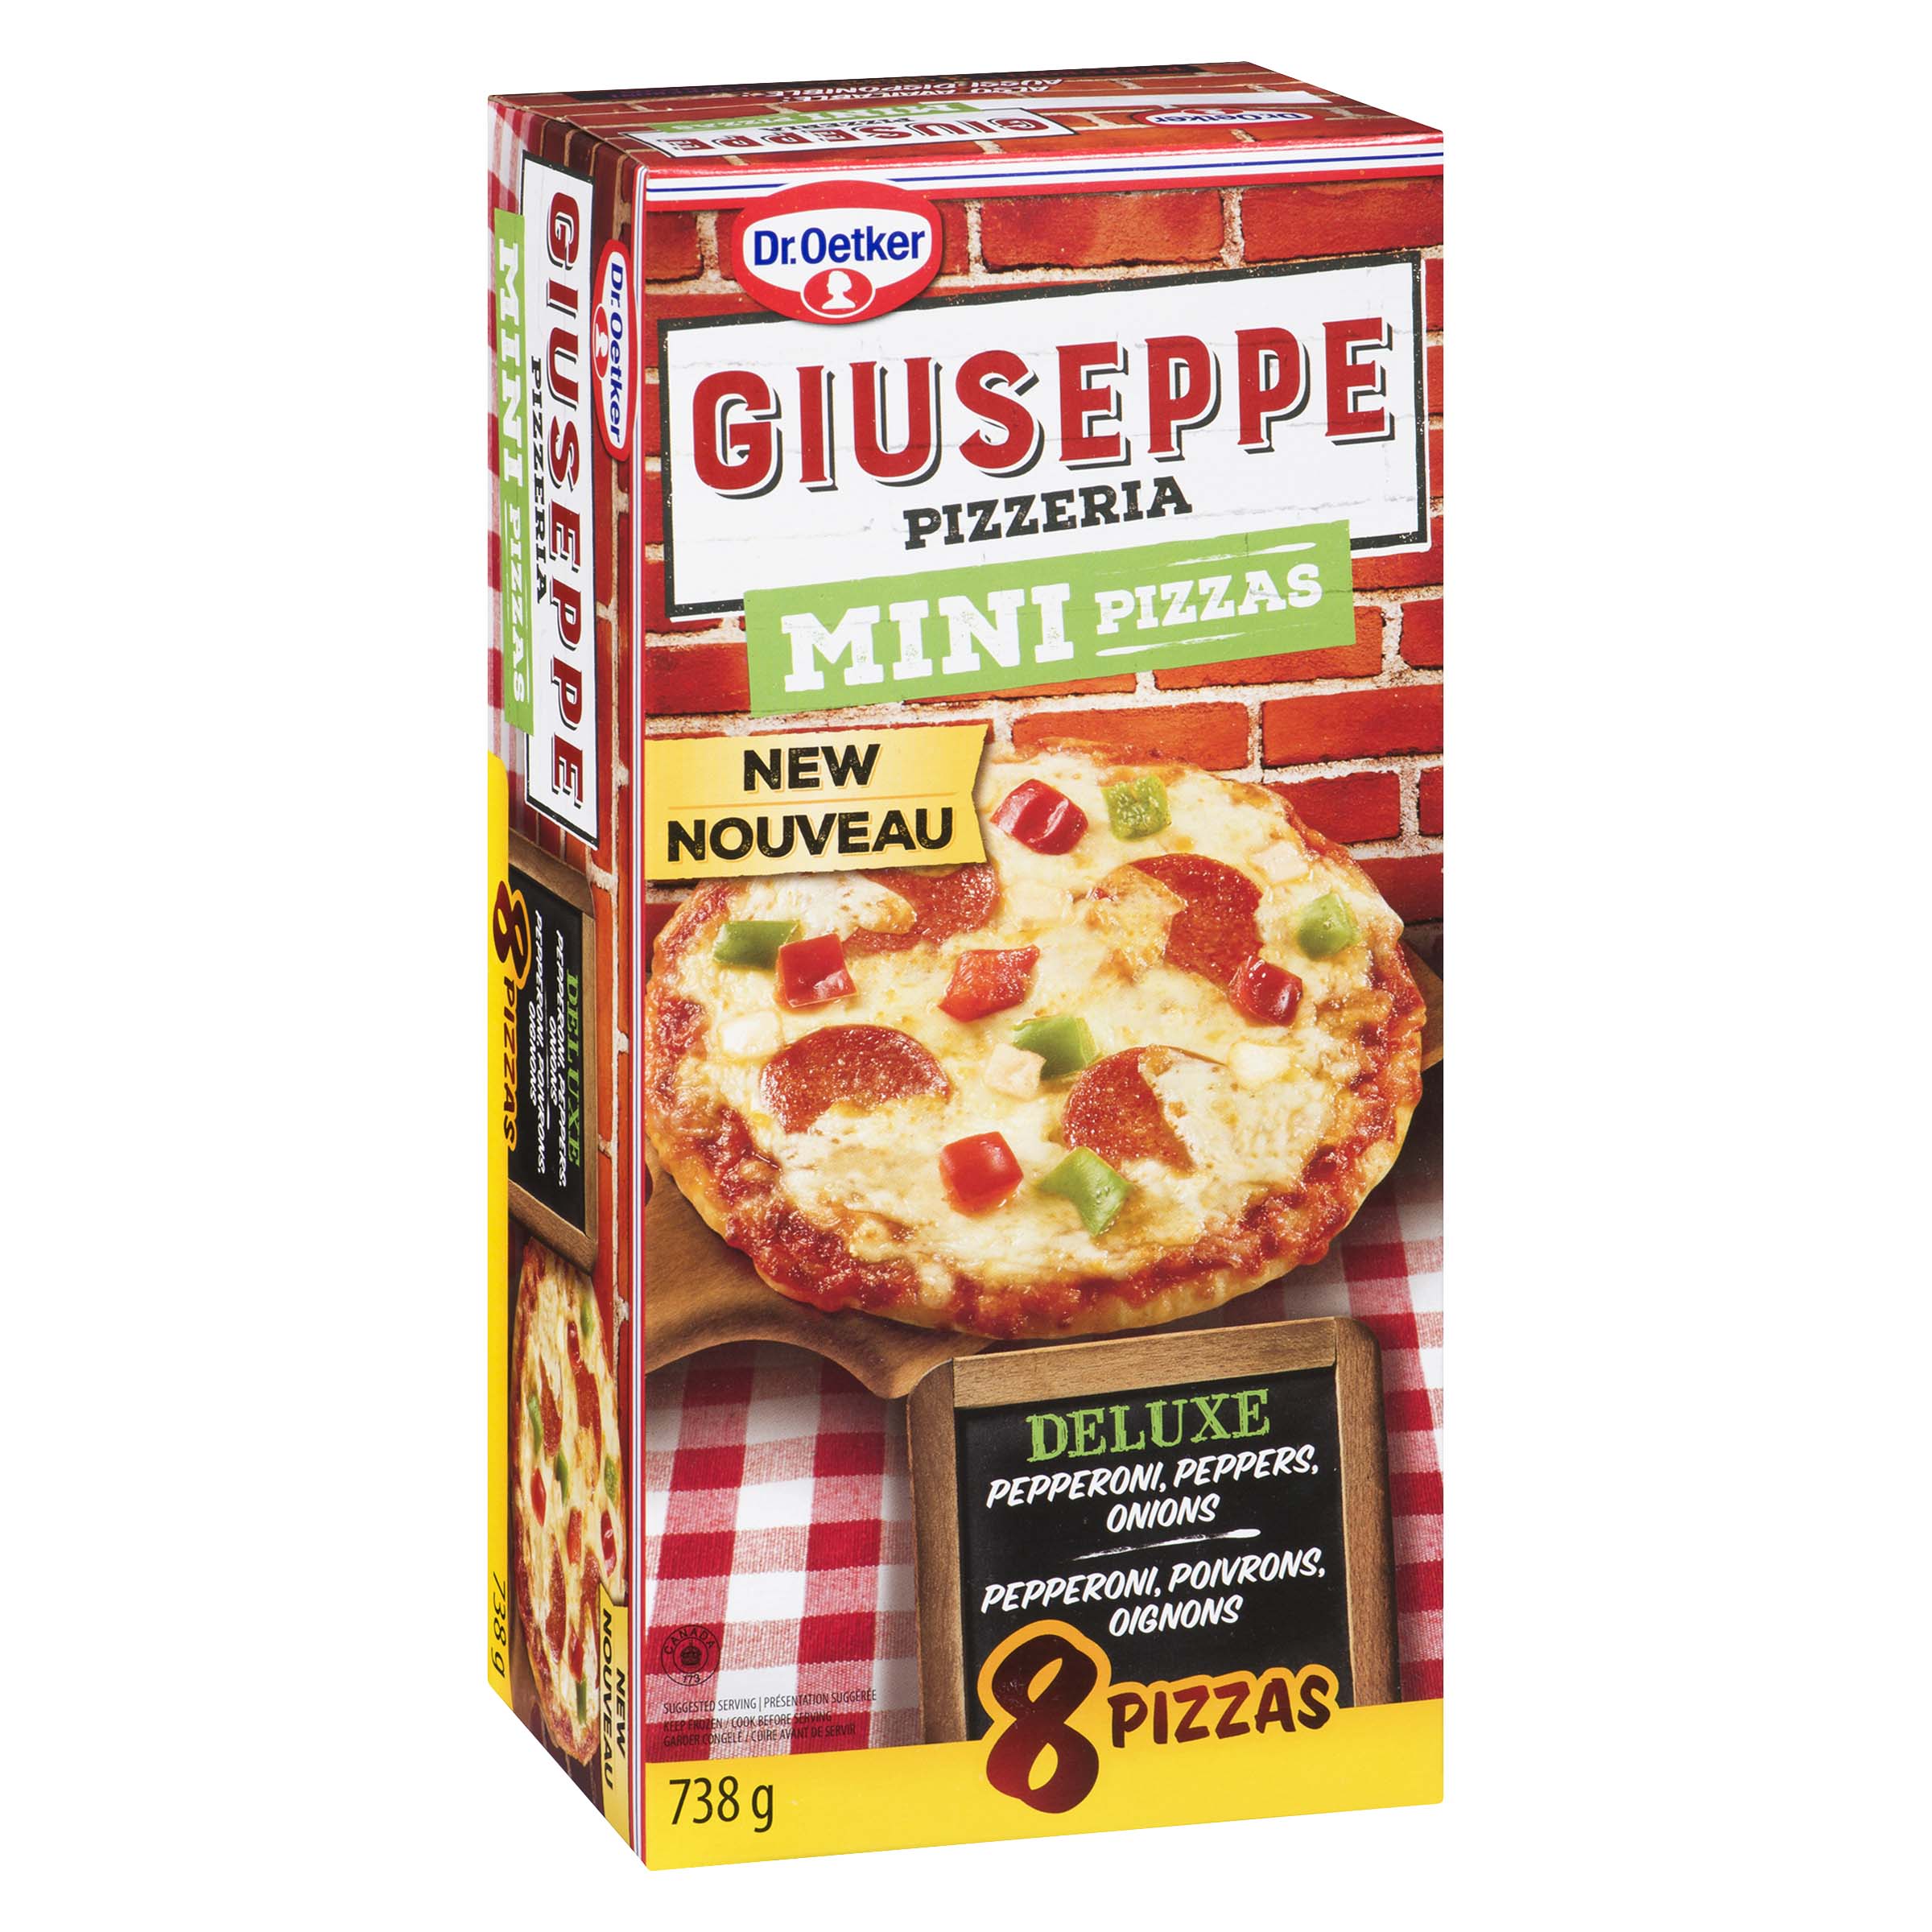 Dr. Oetker Giuseppe Pizzeria 8 Mini Pizzas Deluxe 738 g Powell's